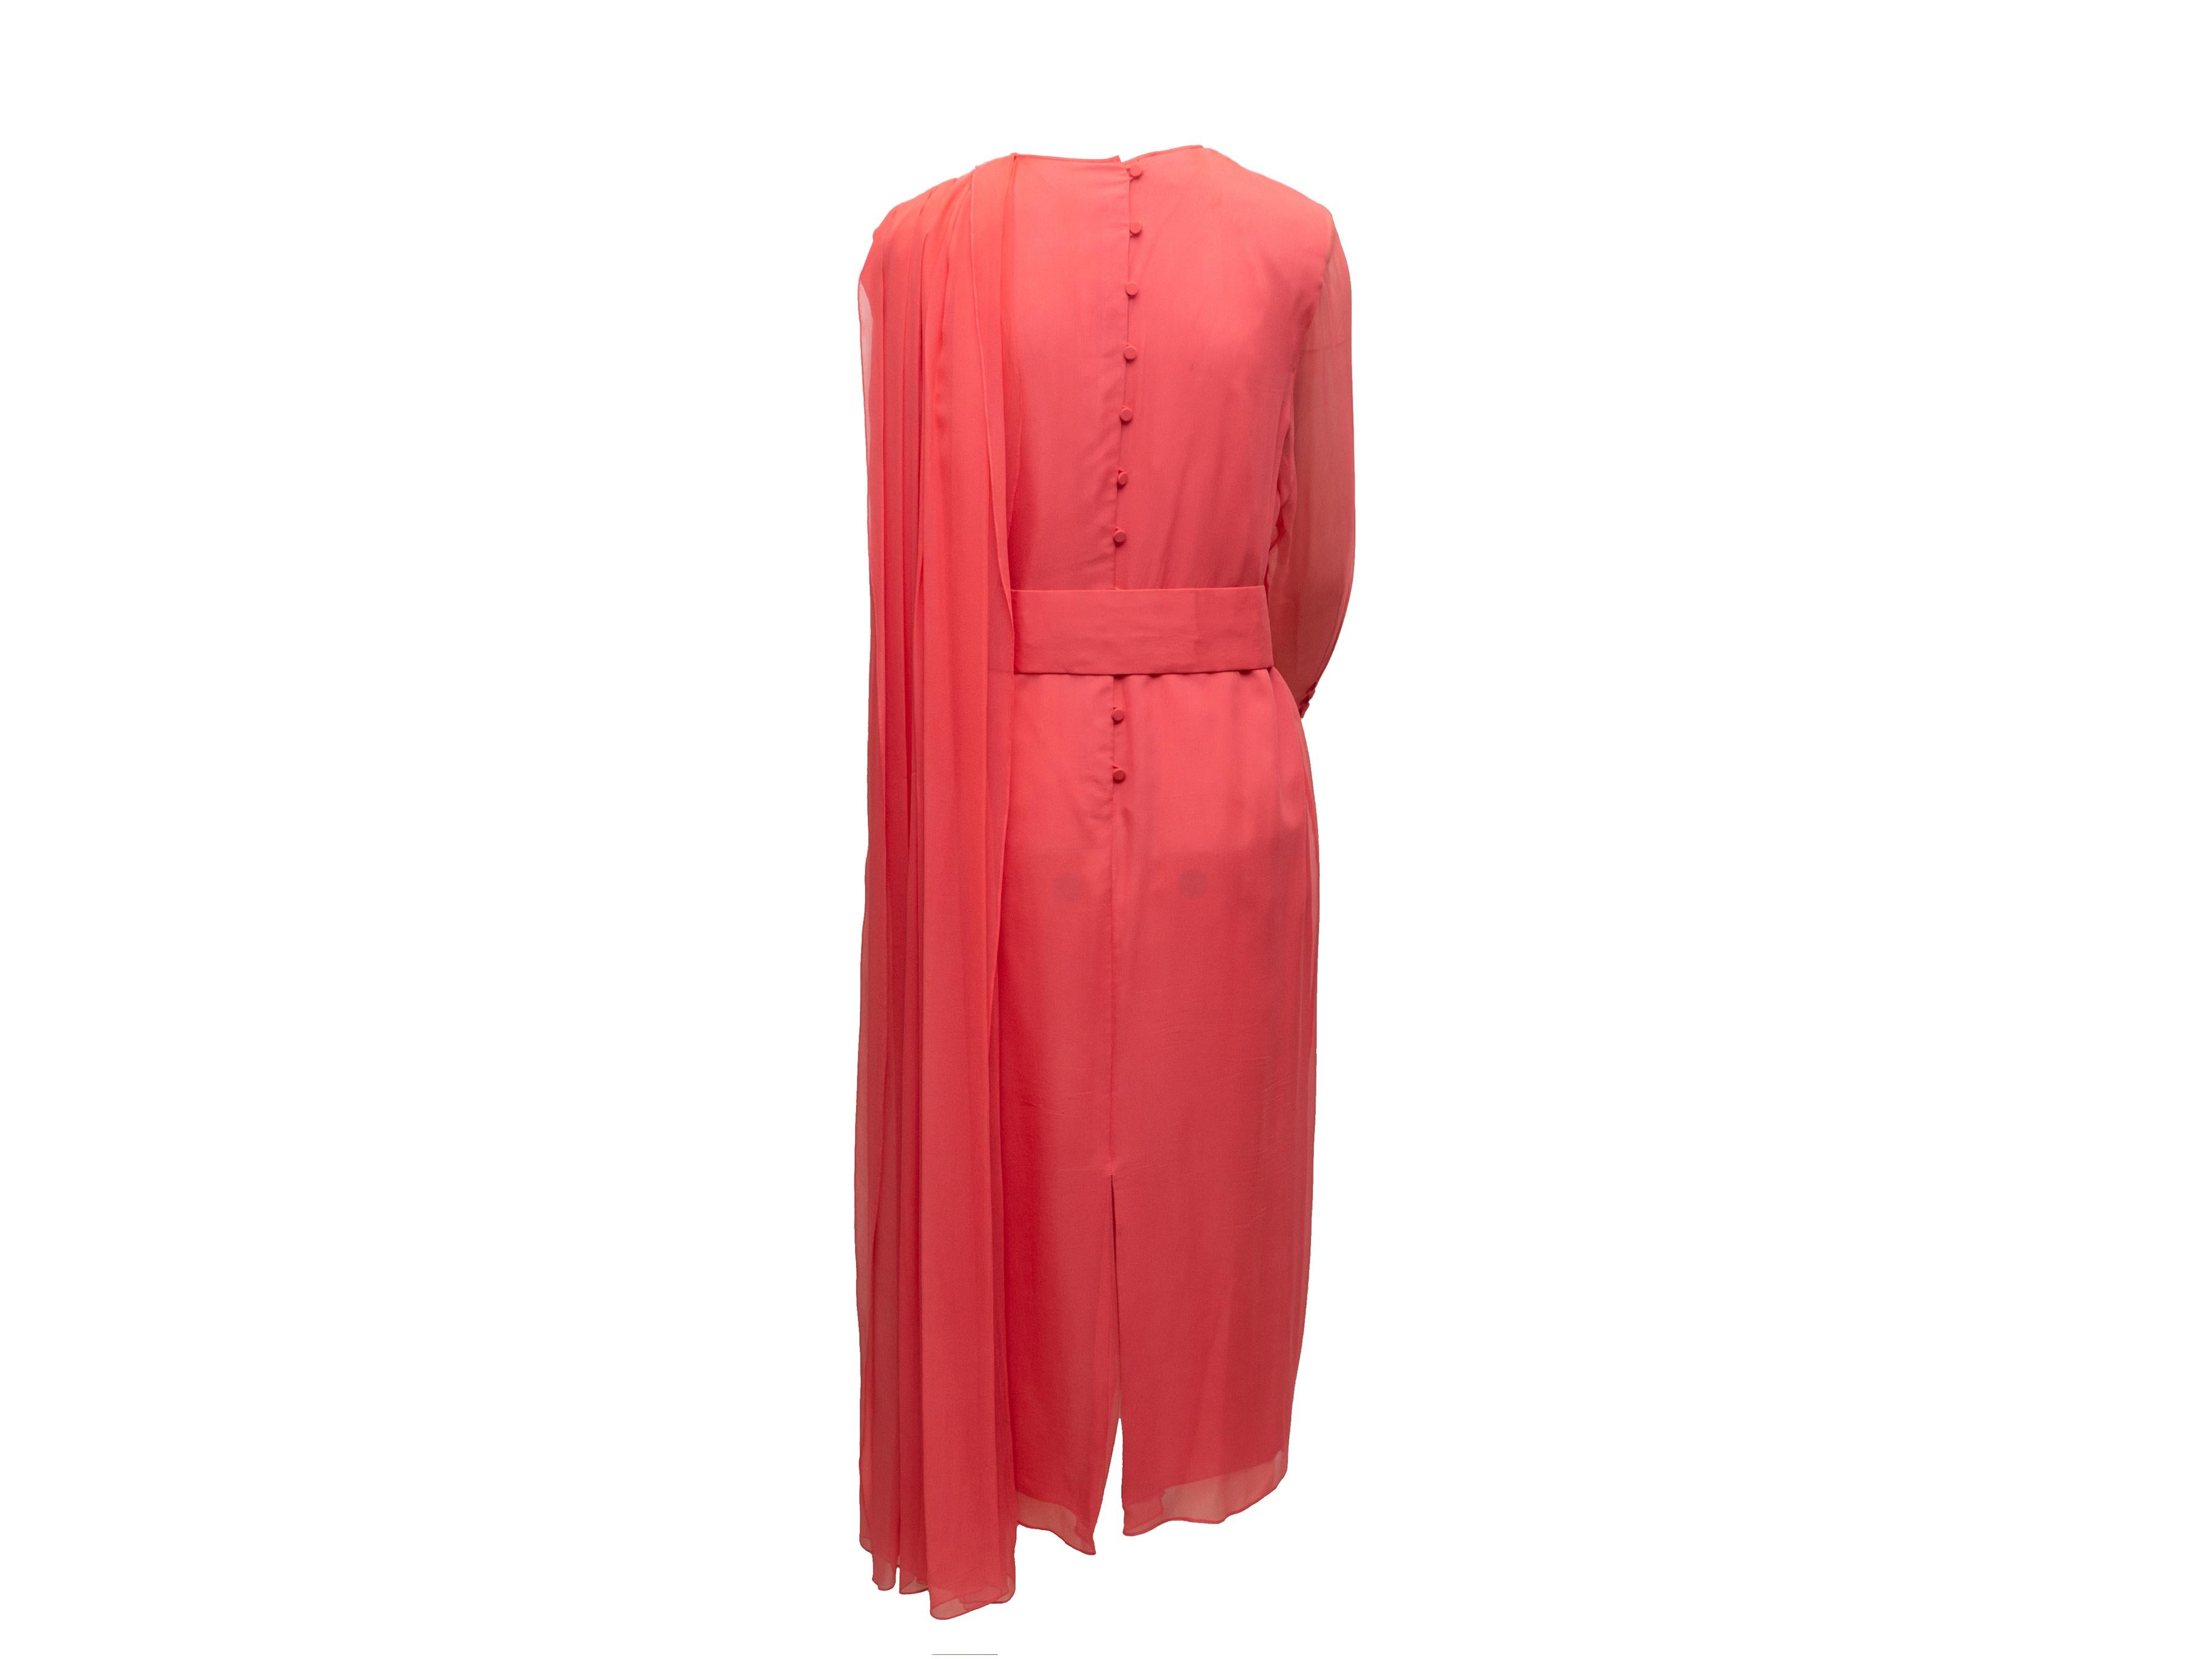  Hanae Mori Coral Silk Dress 1